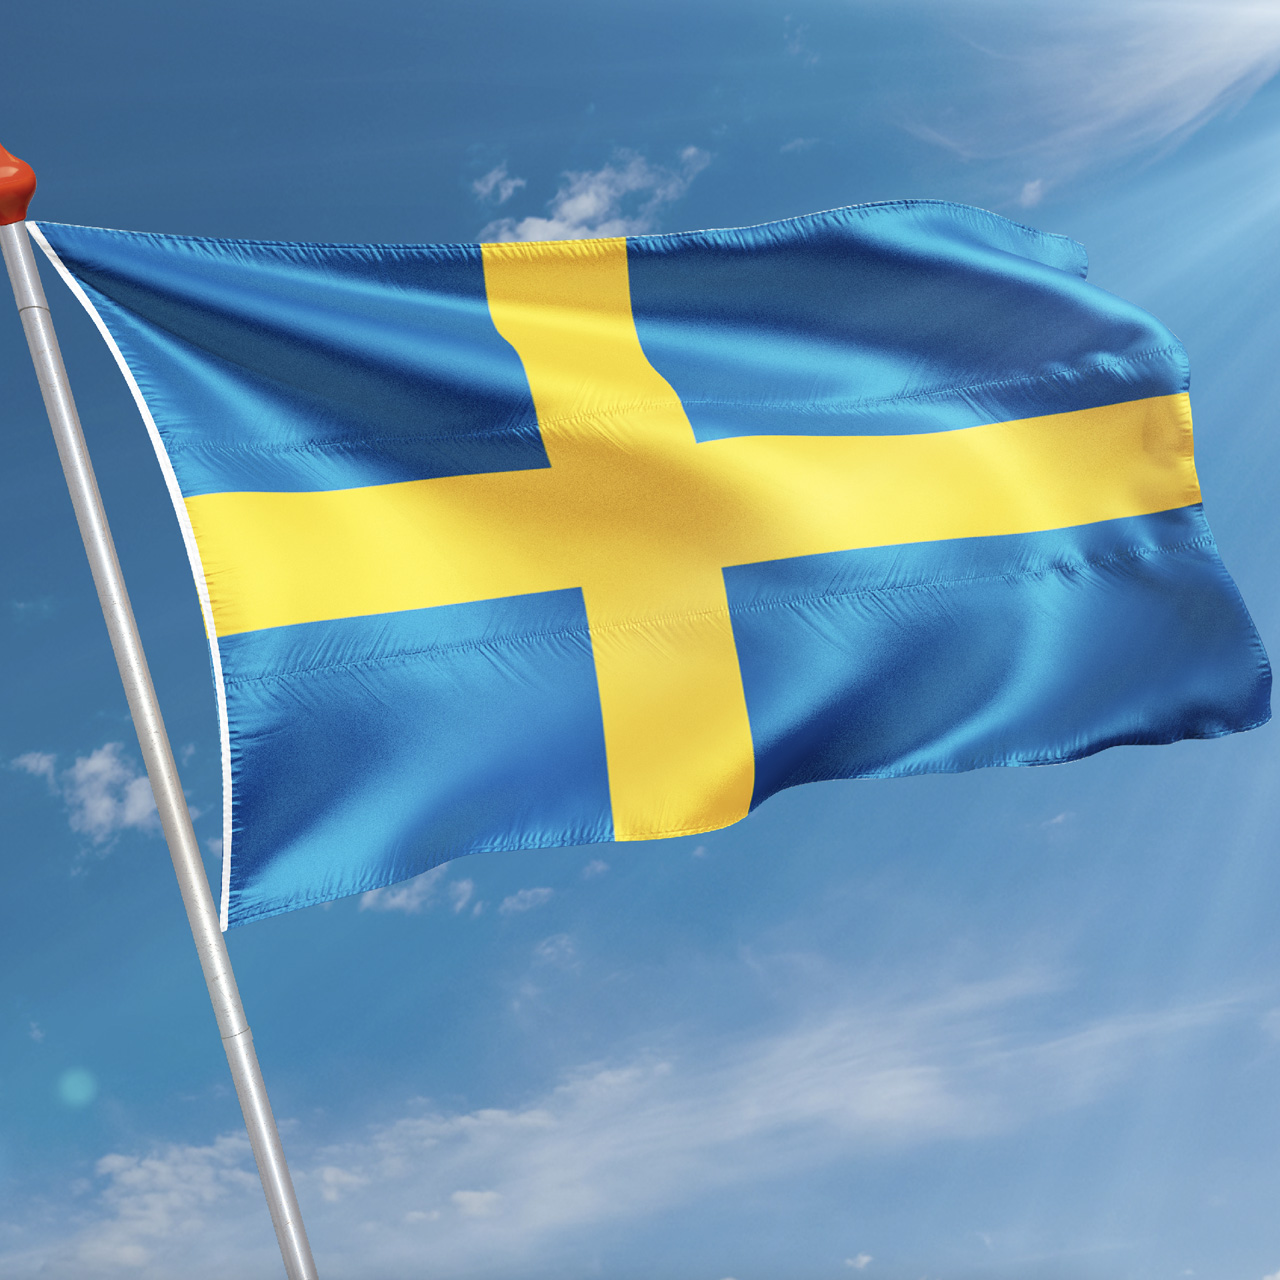 Noordse schoonheid: Deense vlag en Zweedse vlag onder de loep